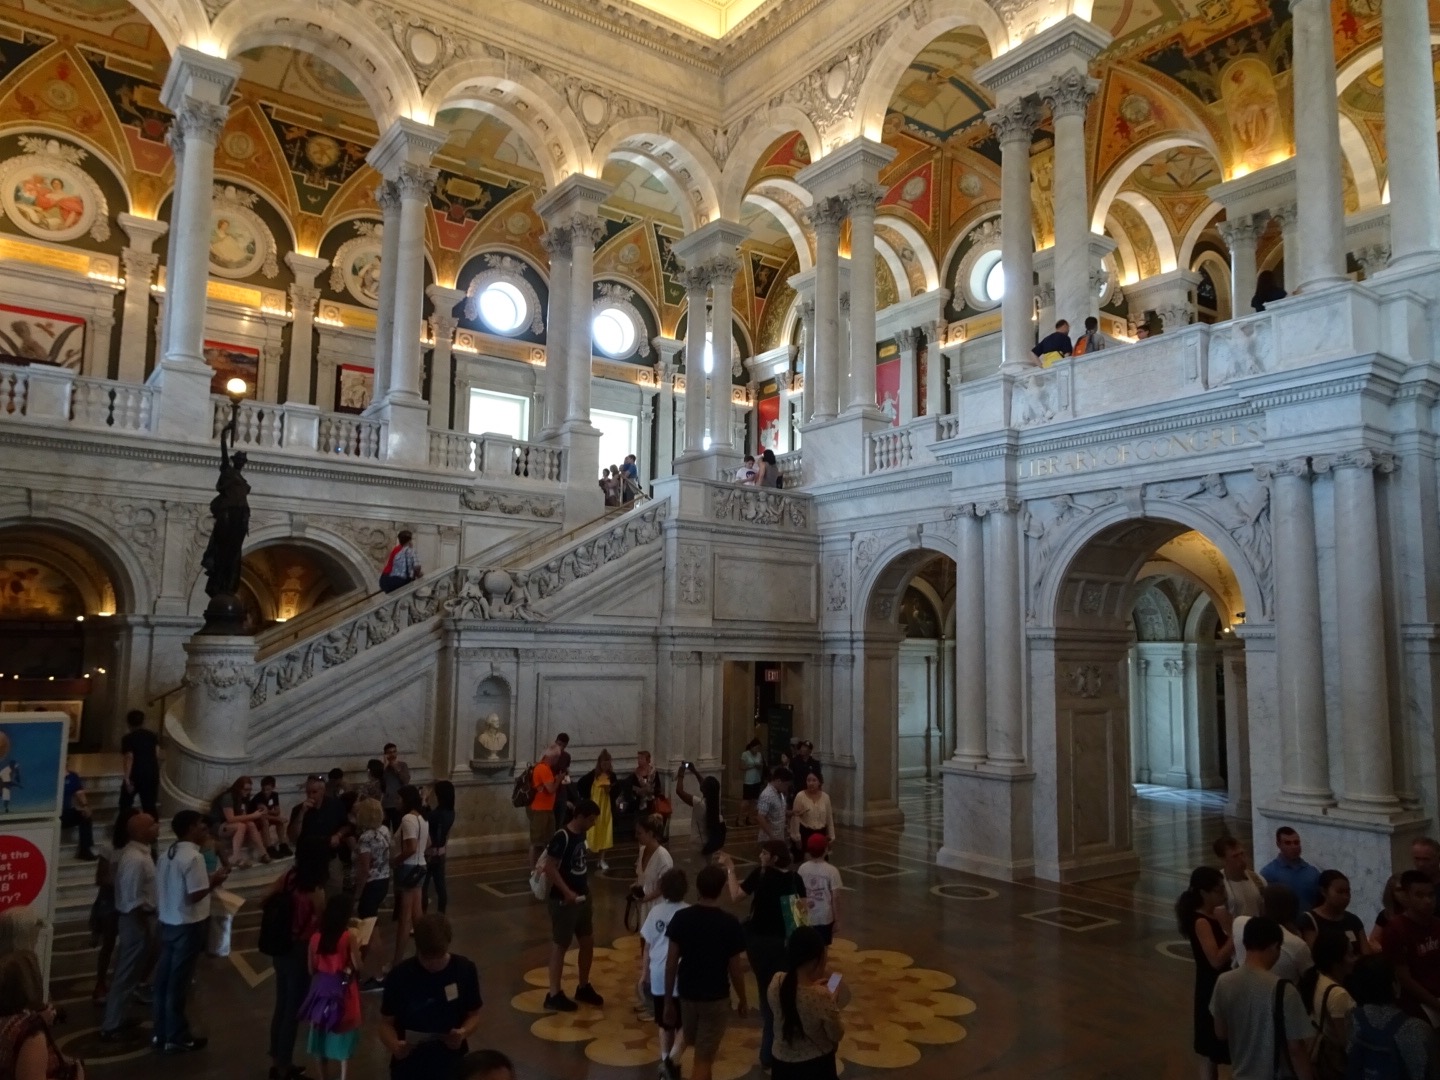 Eingangshalle der Library of Congress